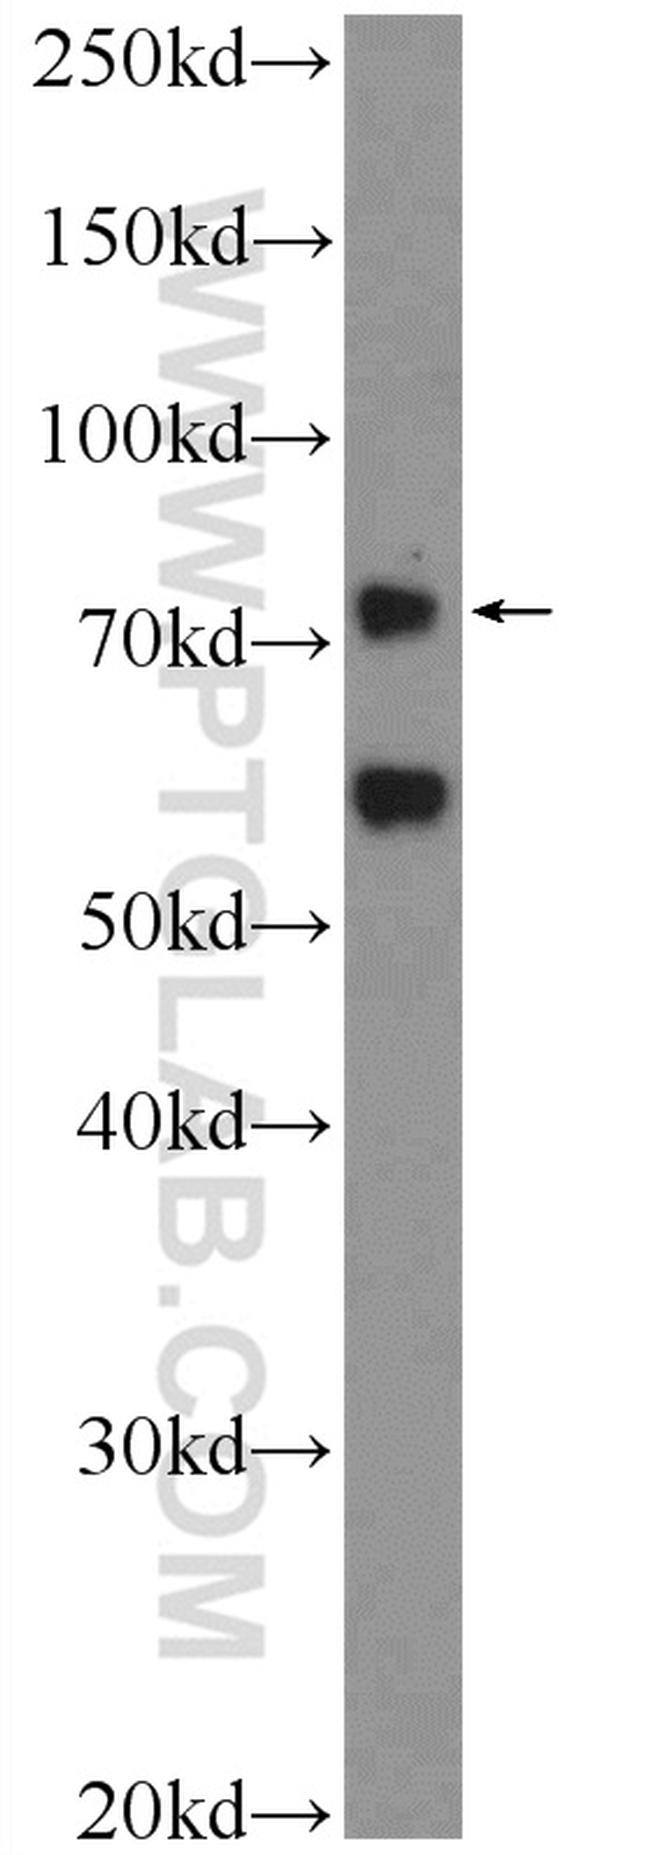 PASD1 Antibody in Western Blot (WB)